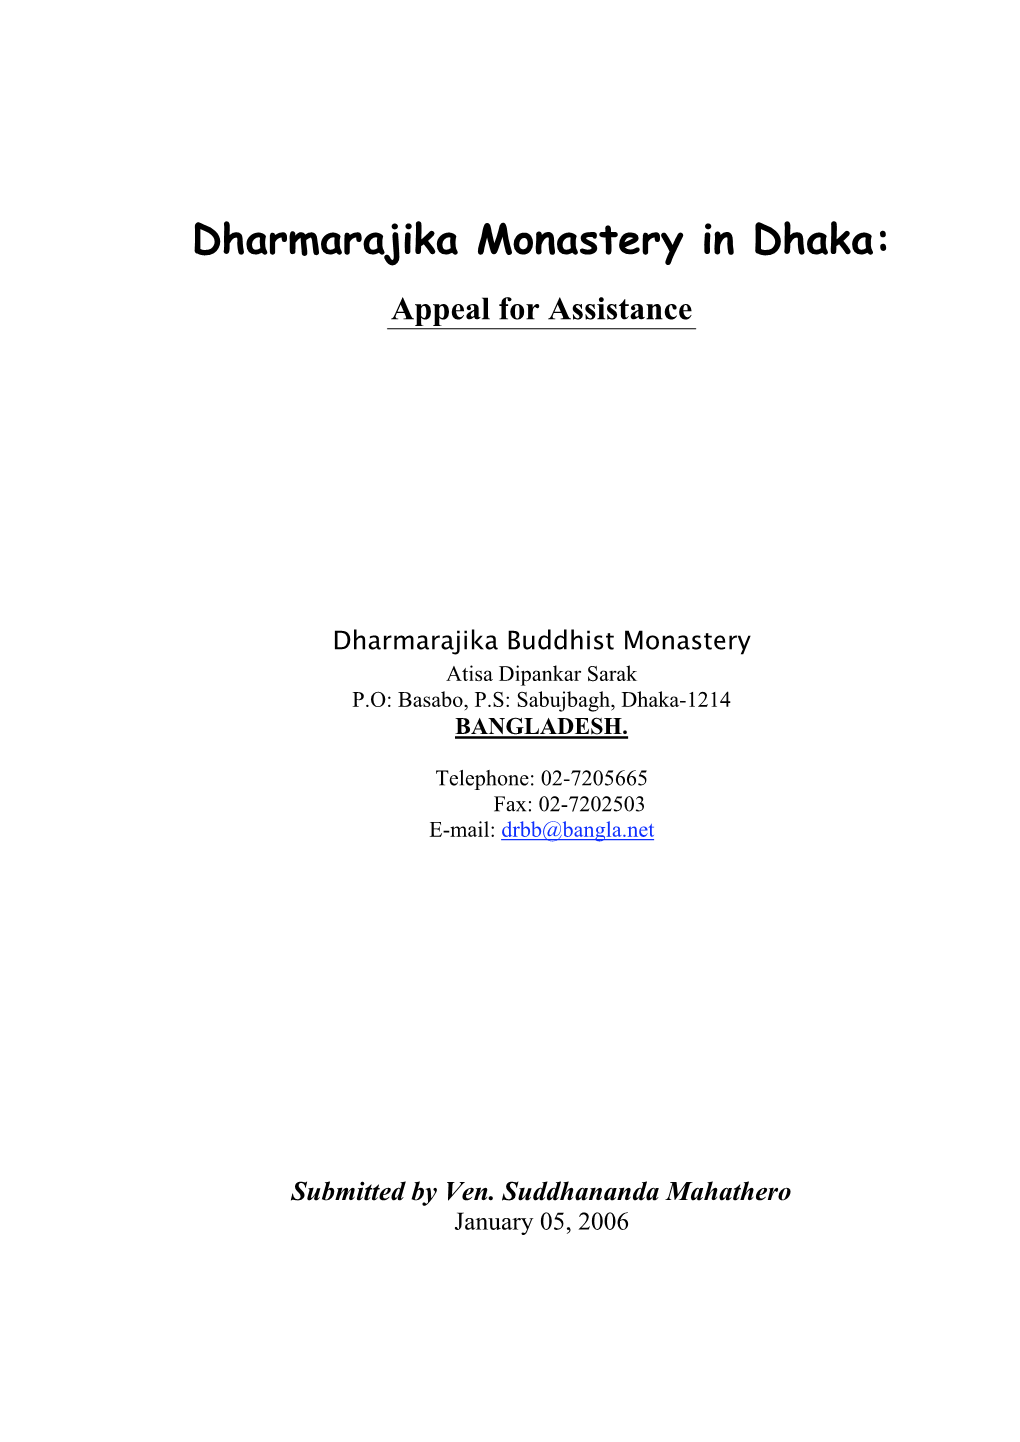 Dharmarajika Monastery in Dhaka: Appeal for Assistance